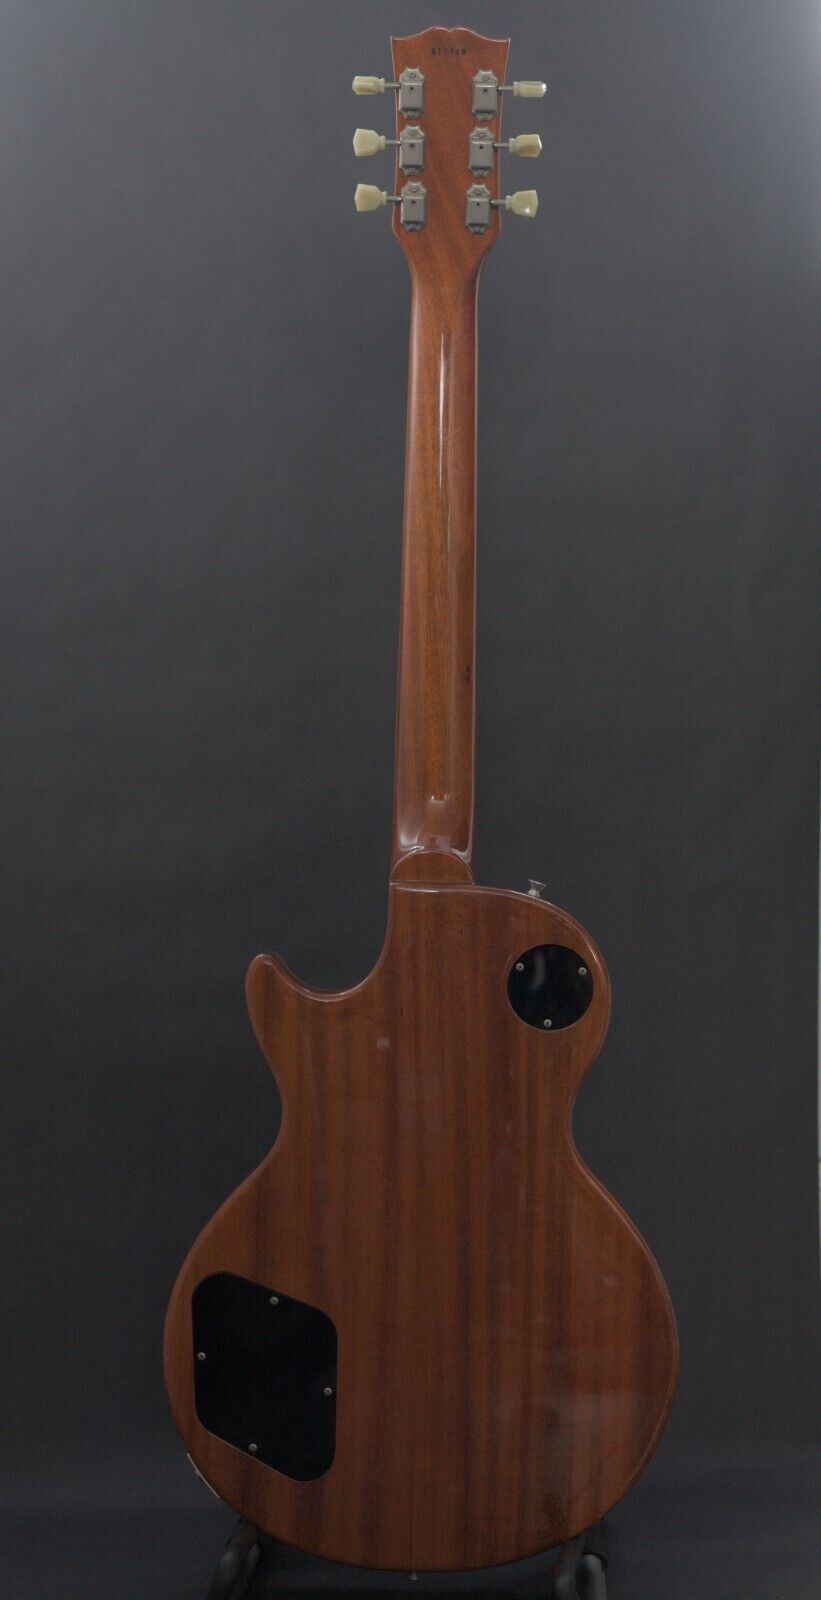 Paul Standard LPS-80F Photo Flame, Electric Guitar som samma av bilderna